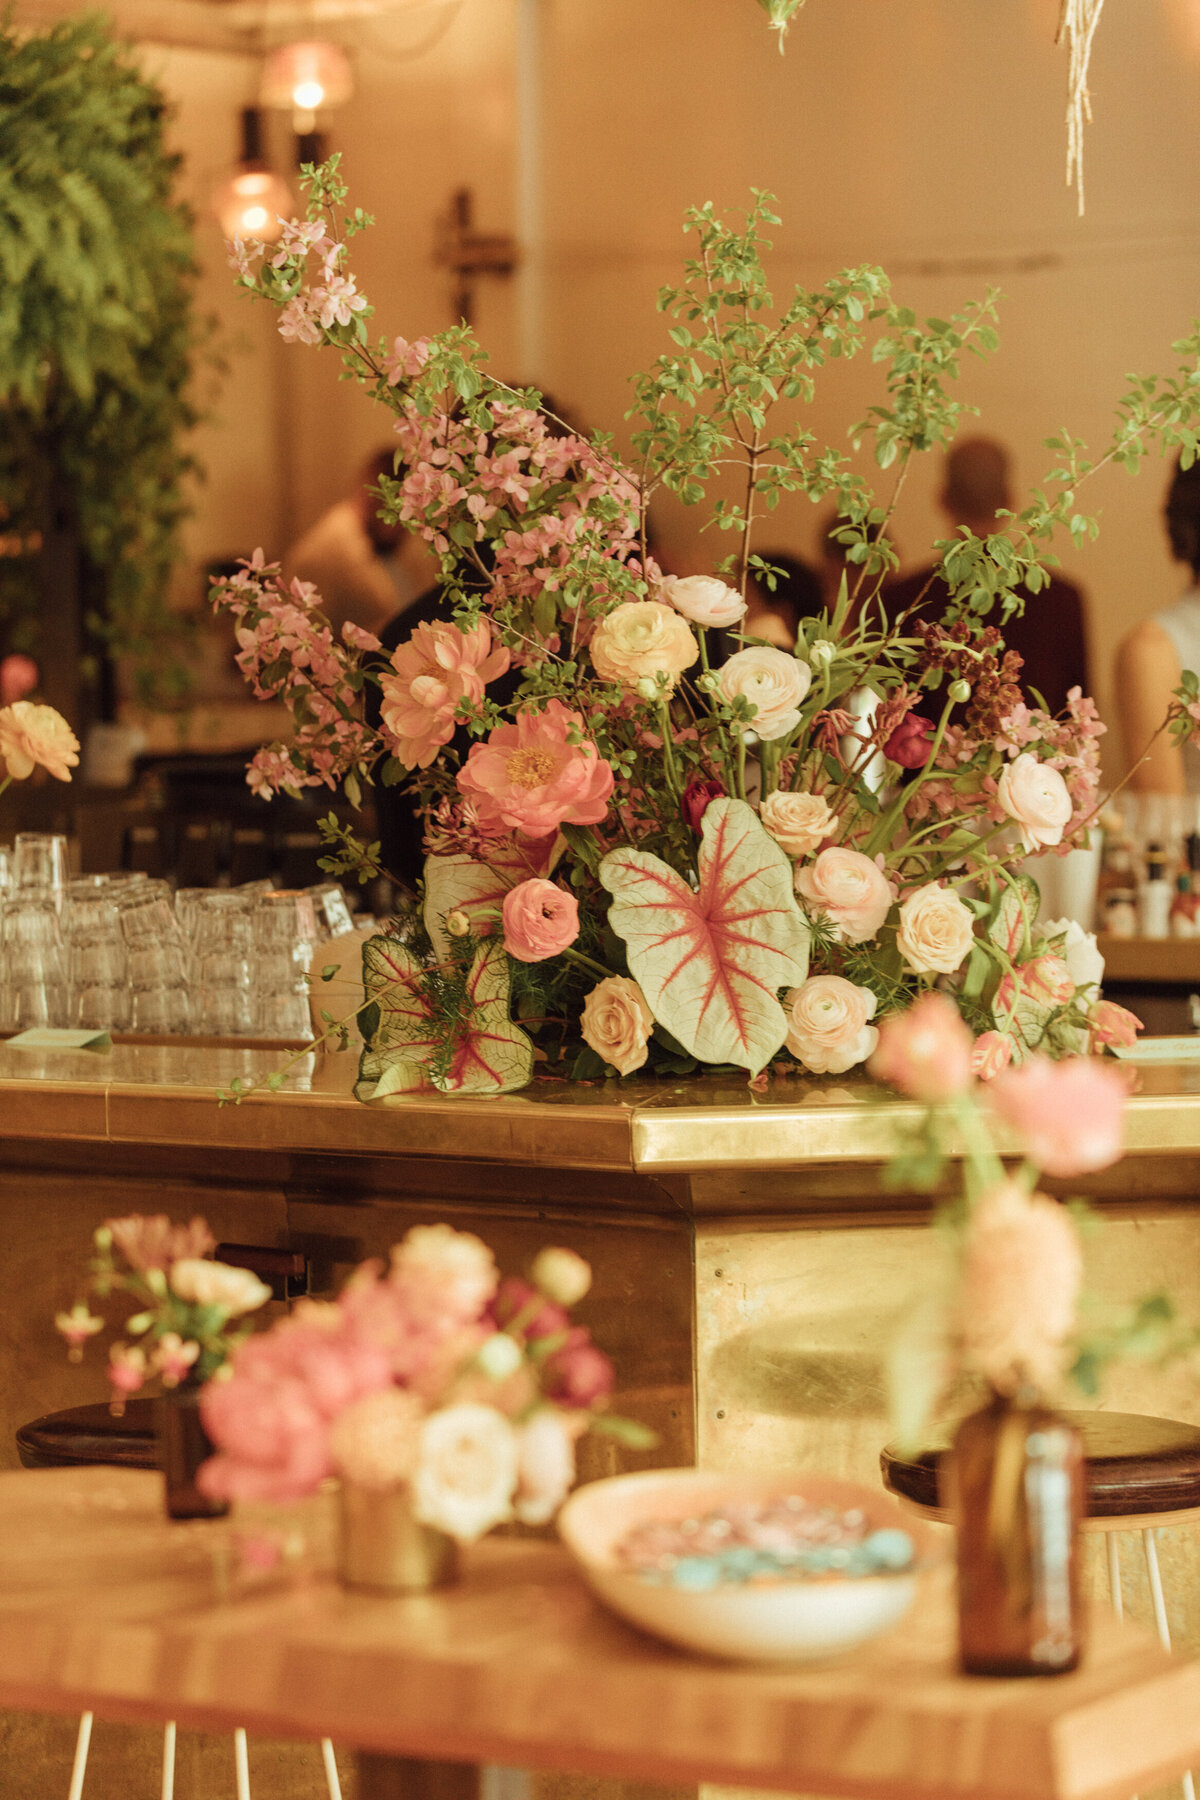 Atelier-Carmel-Wedding-Florist-GALLERY-Decor-1